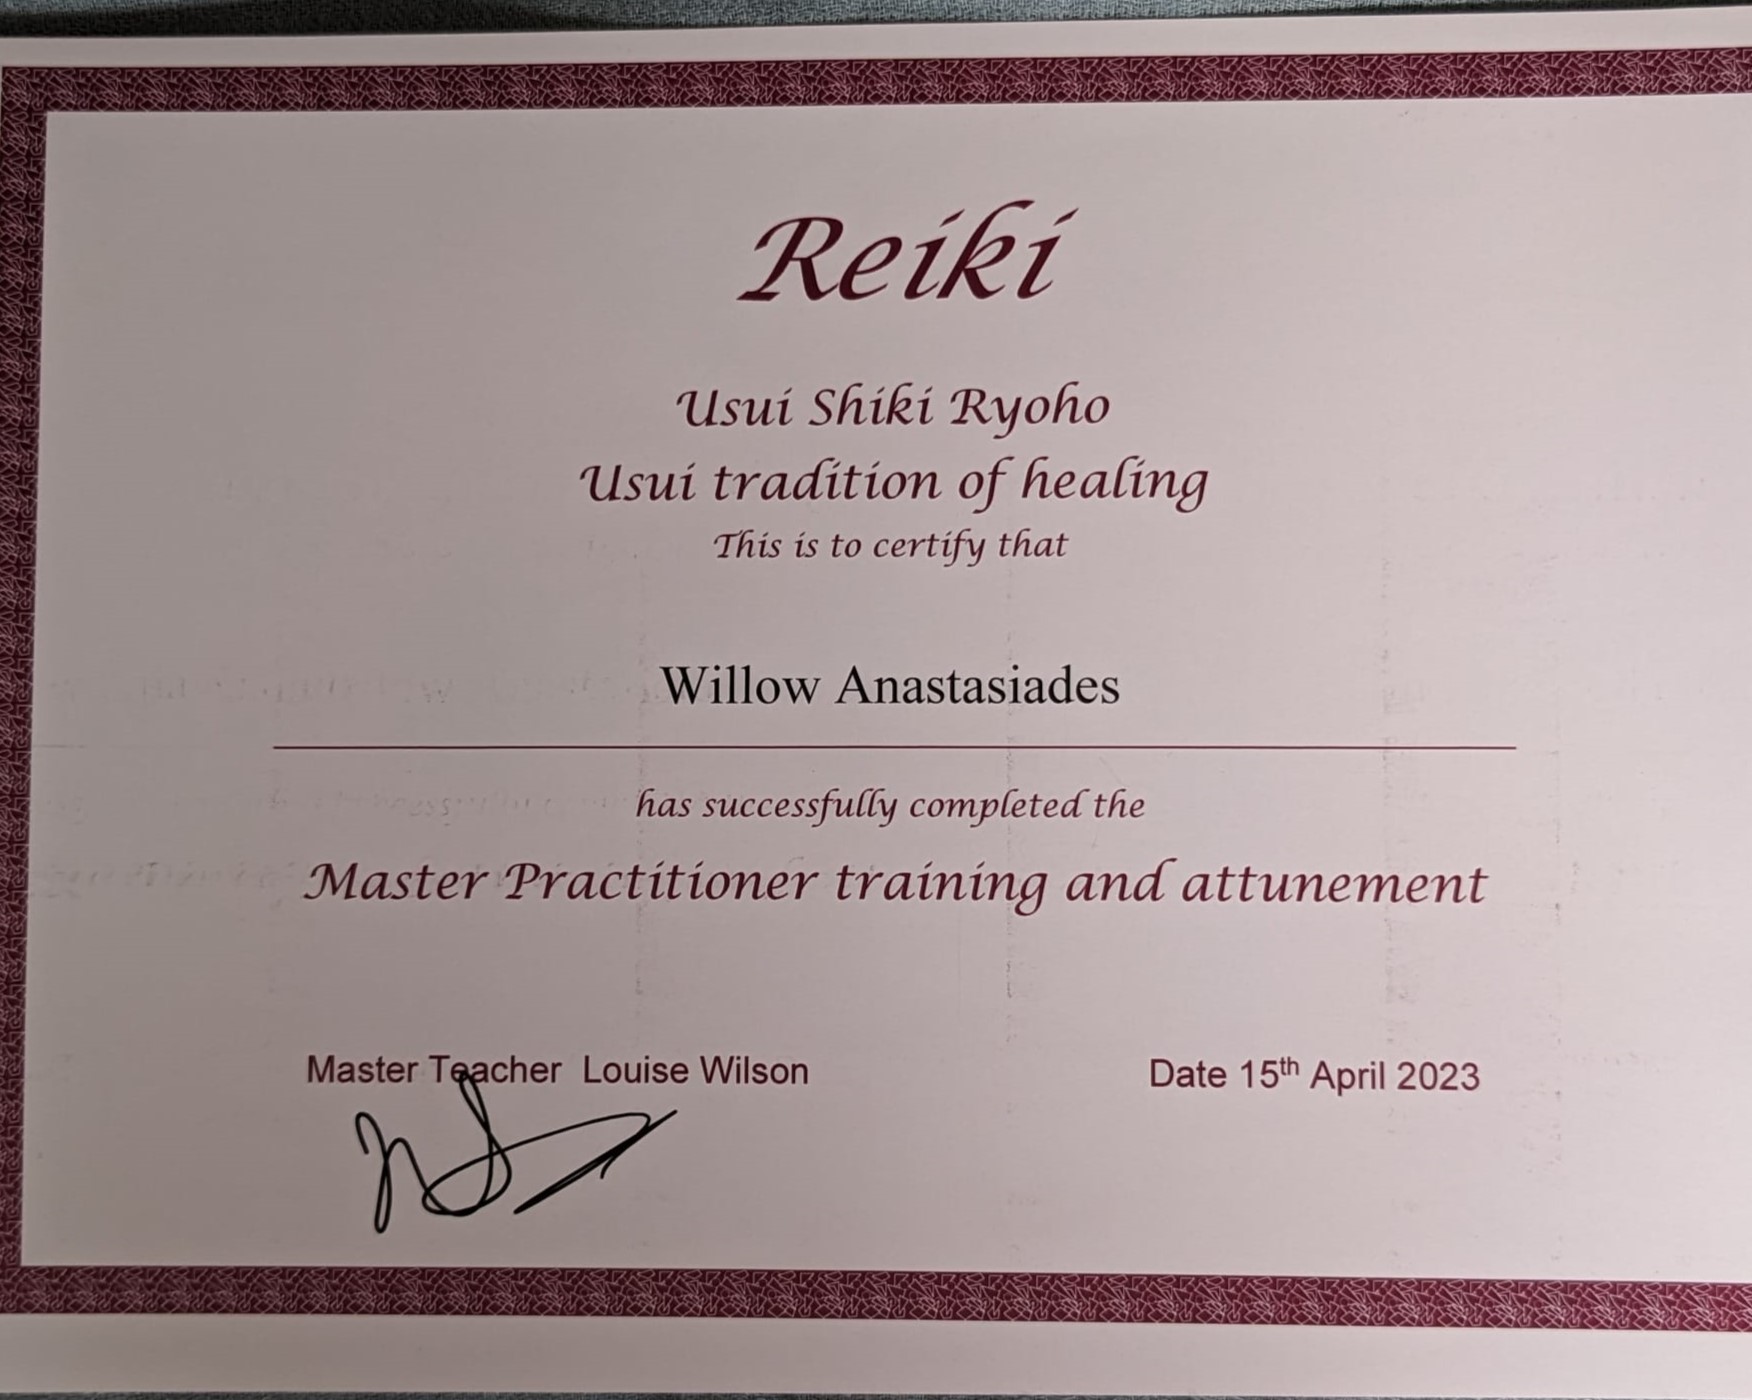 reiki qualification for master practitioner